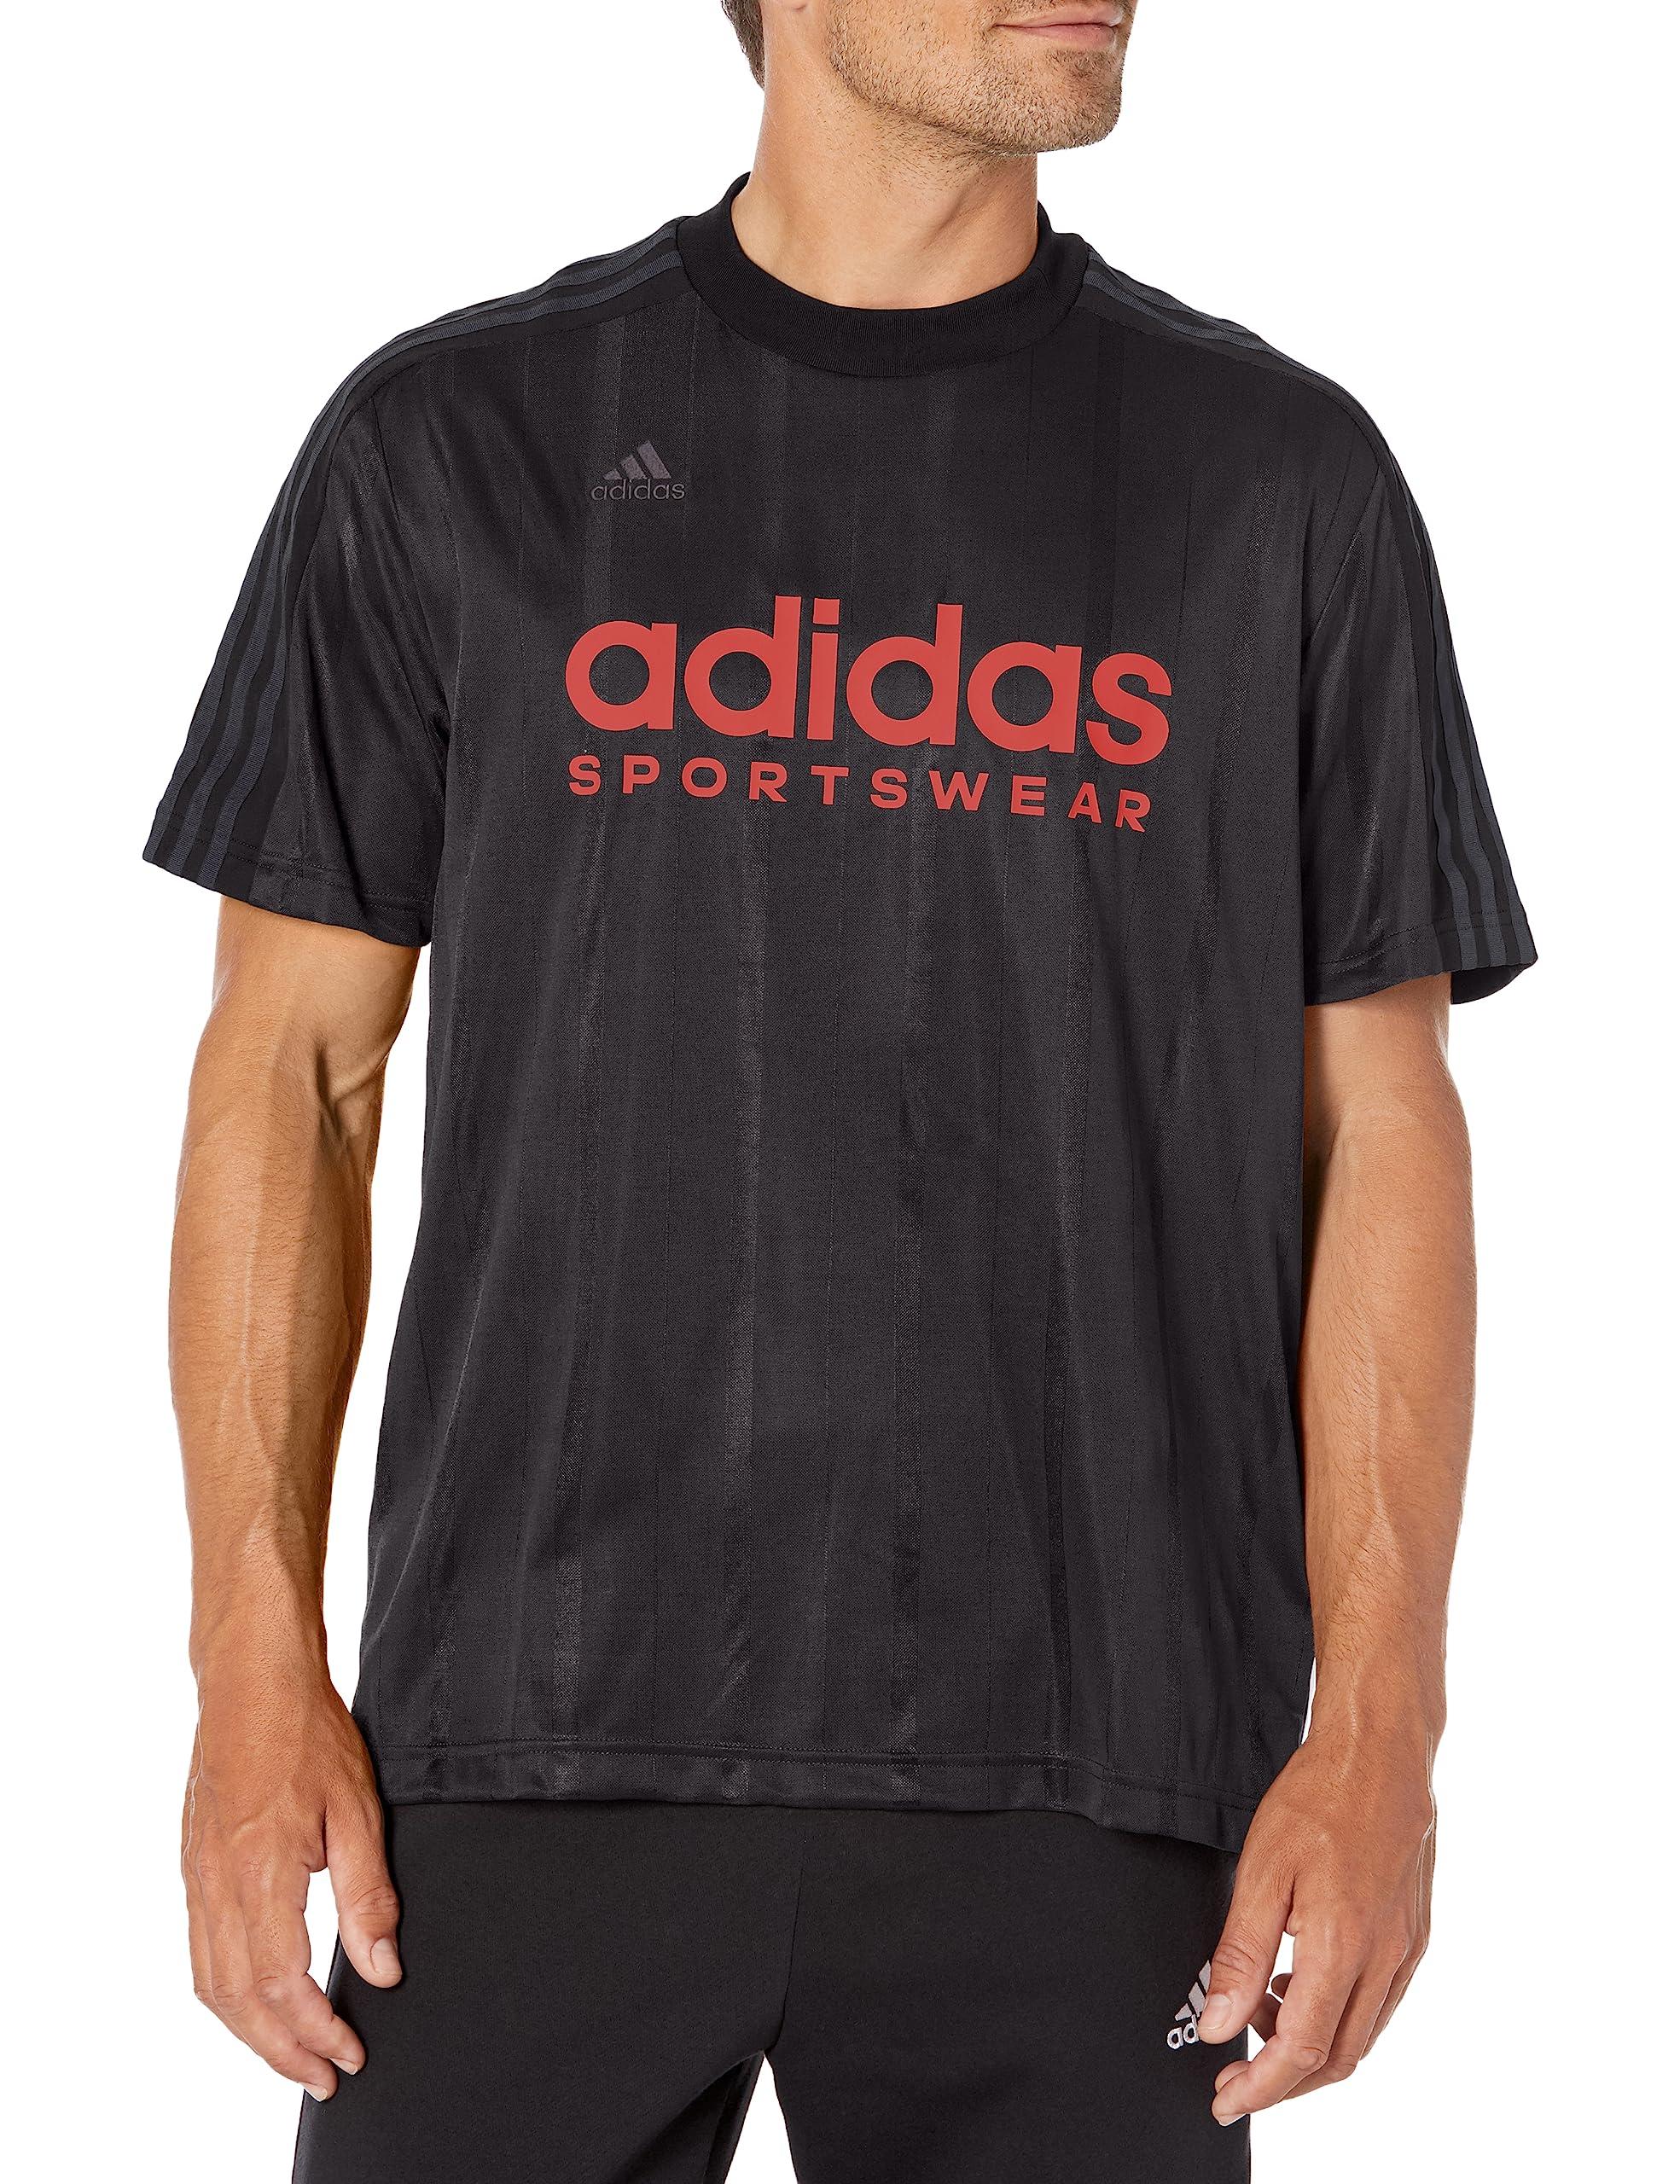 adidas Tiro S World Cup T-shirt in Black | Lyst